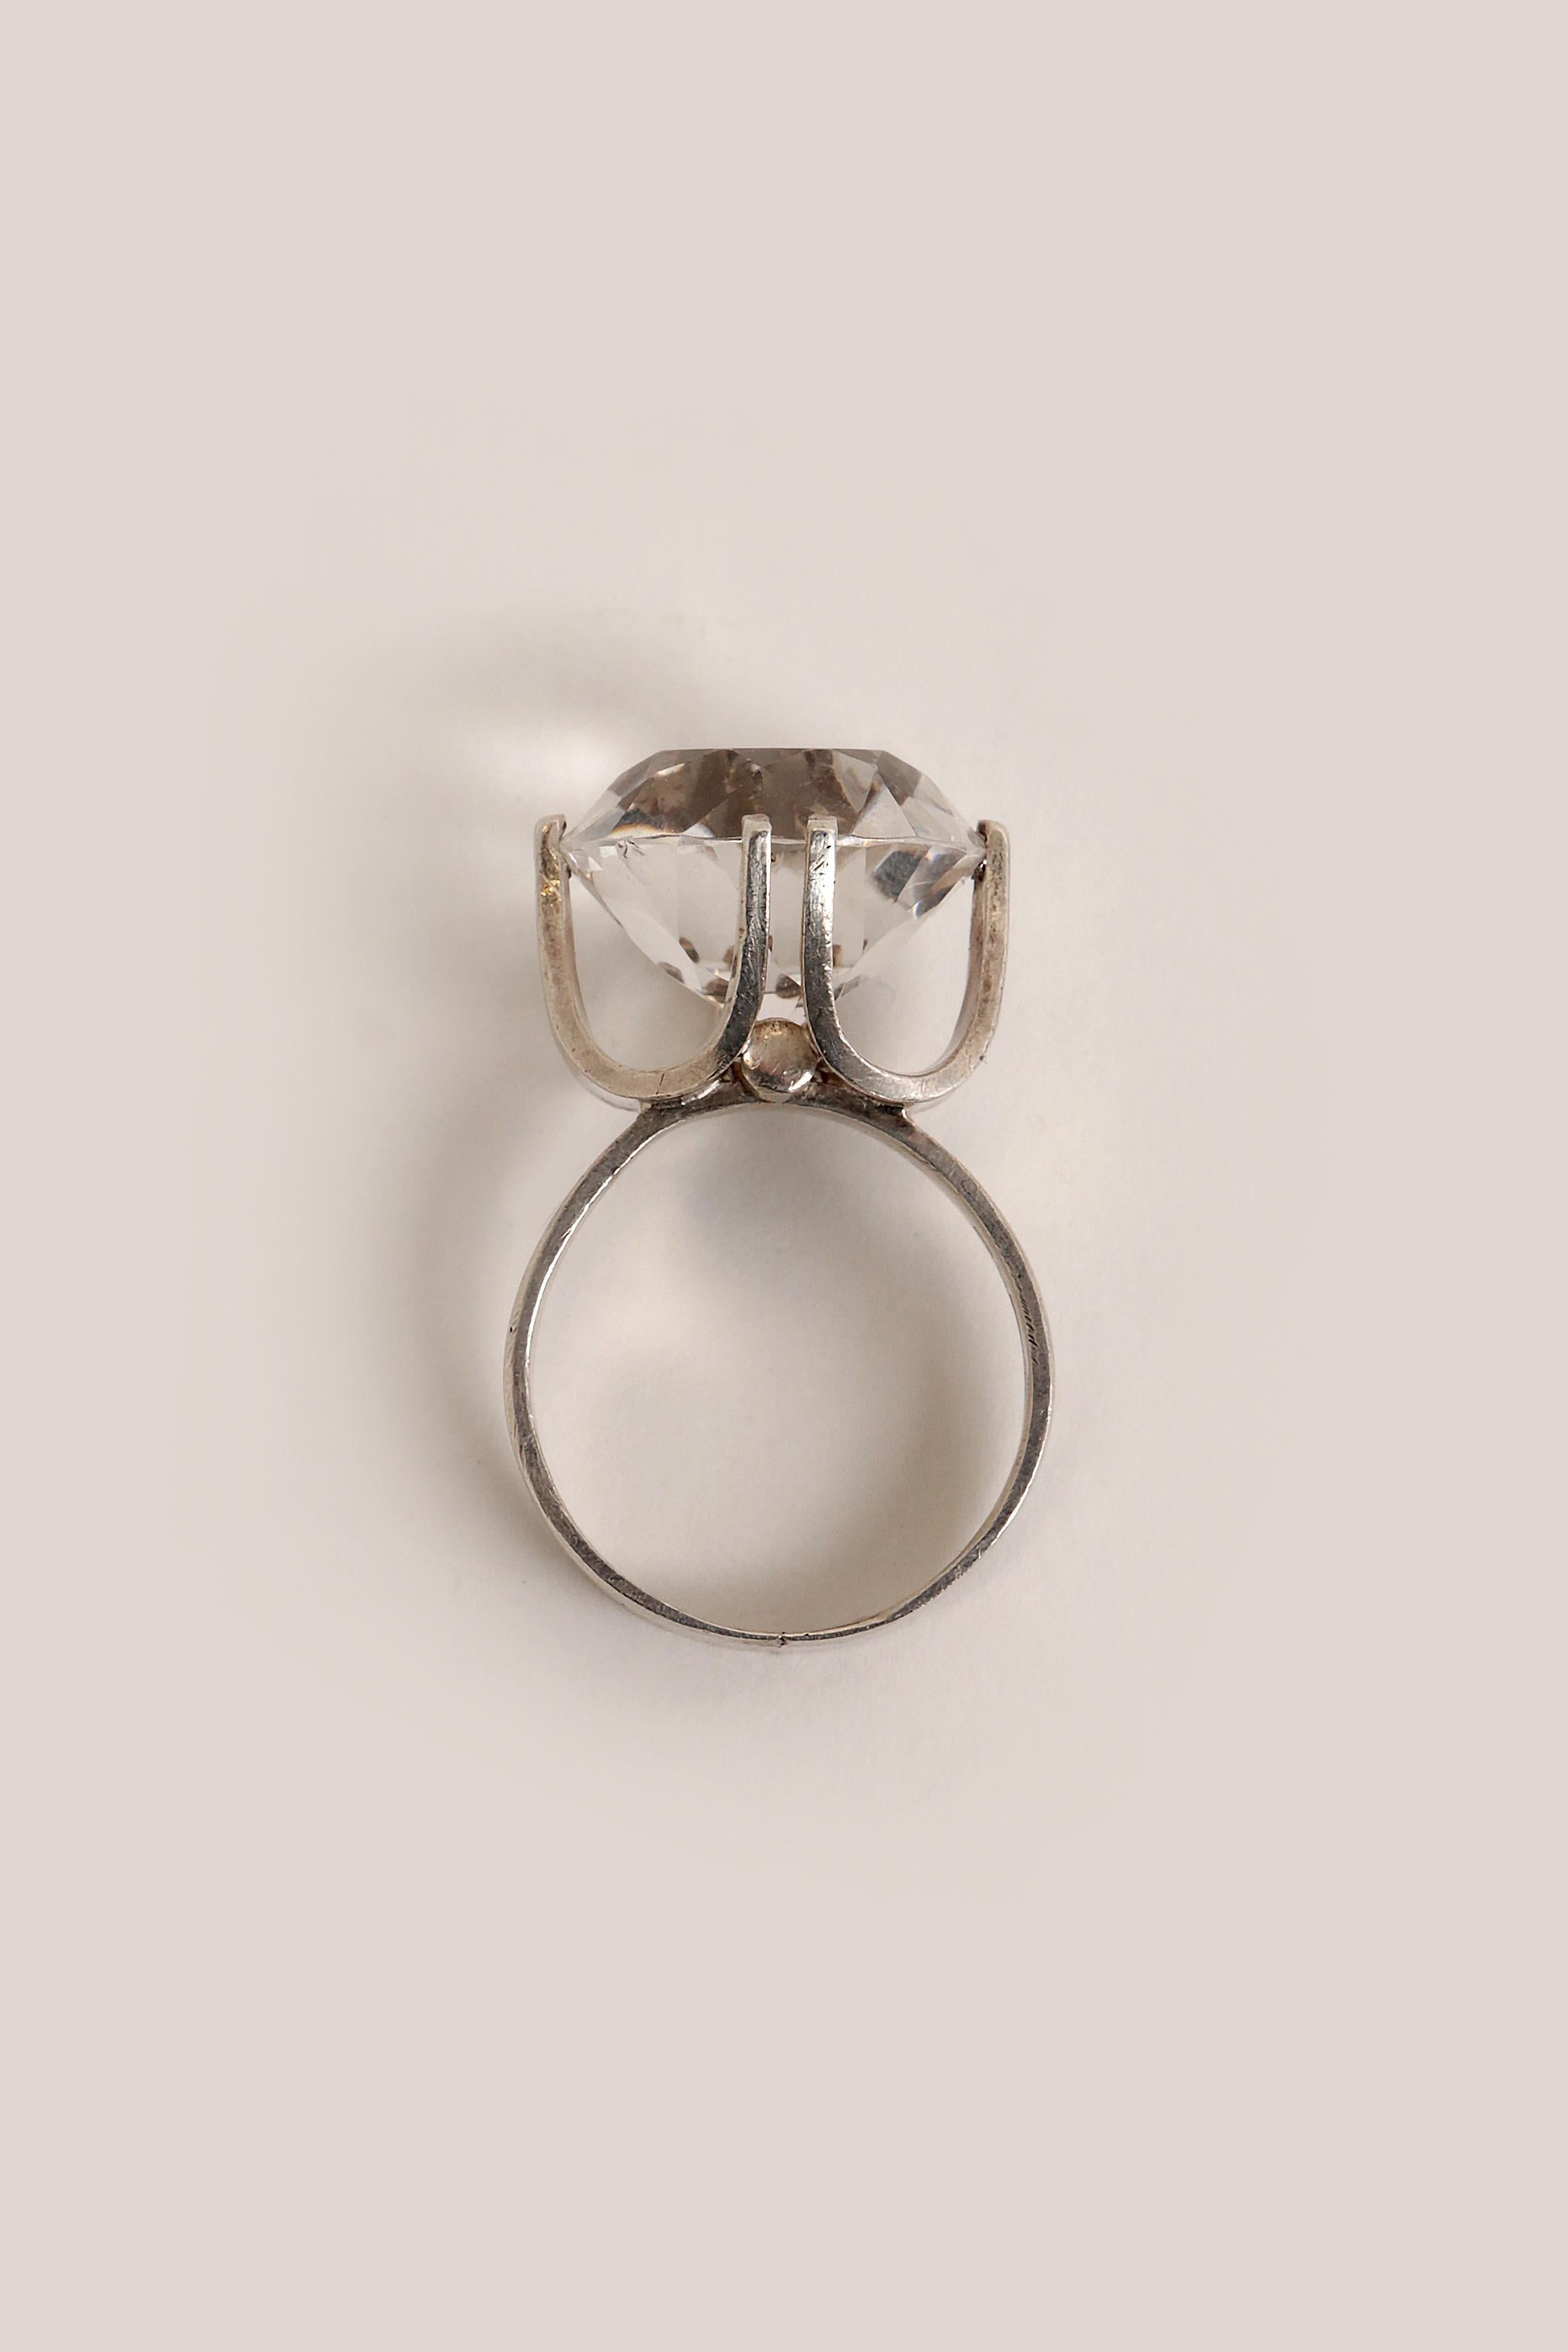 Silver ring with rock crystal design Ellis Kauppi, Finland 1975 For Sale 1